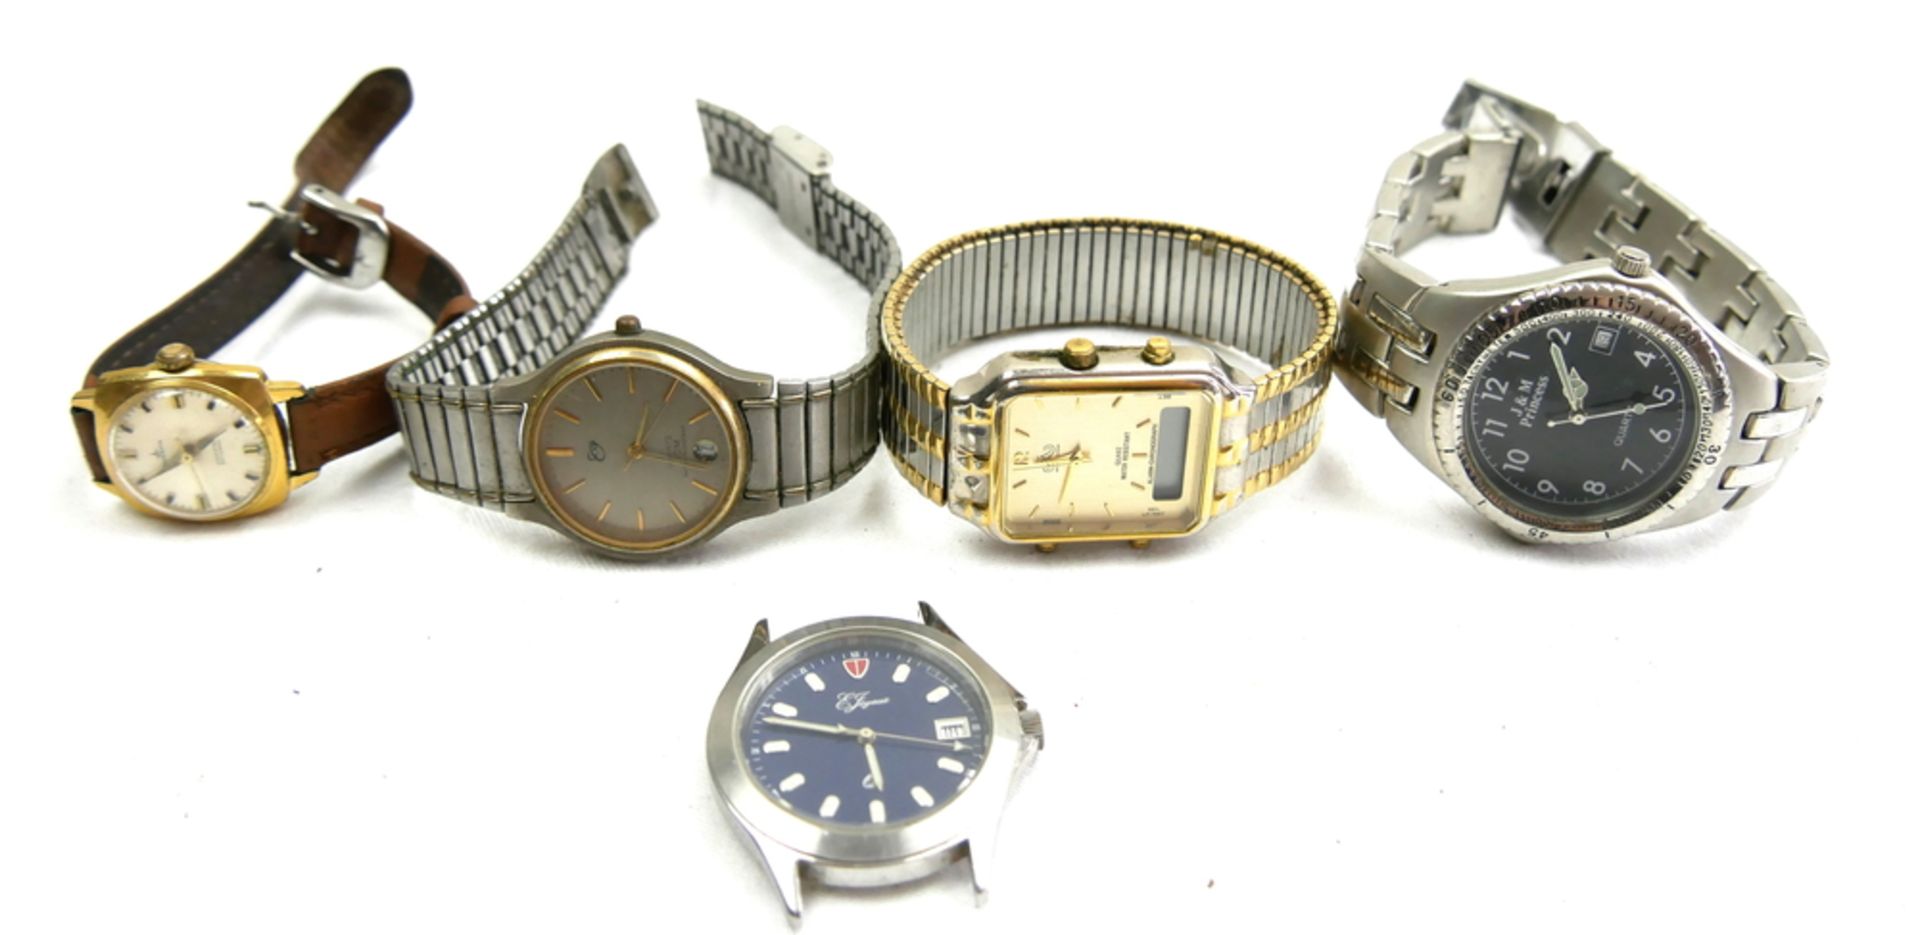 Lot Armbanduhren, verschiedene Modelle. Bitte besichtigen!